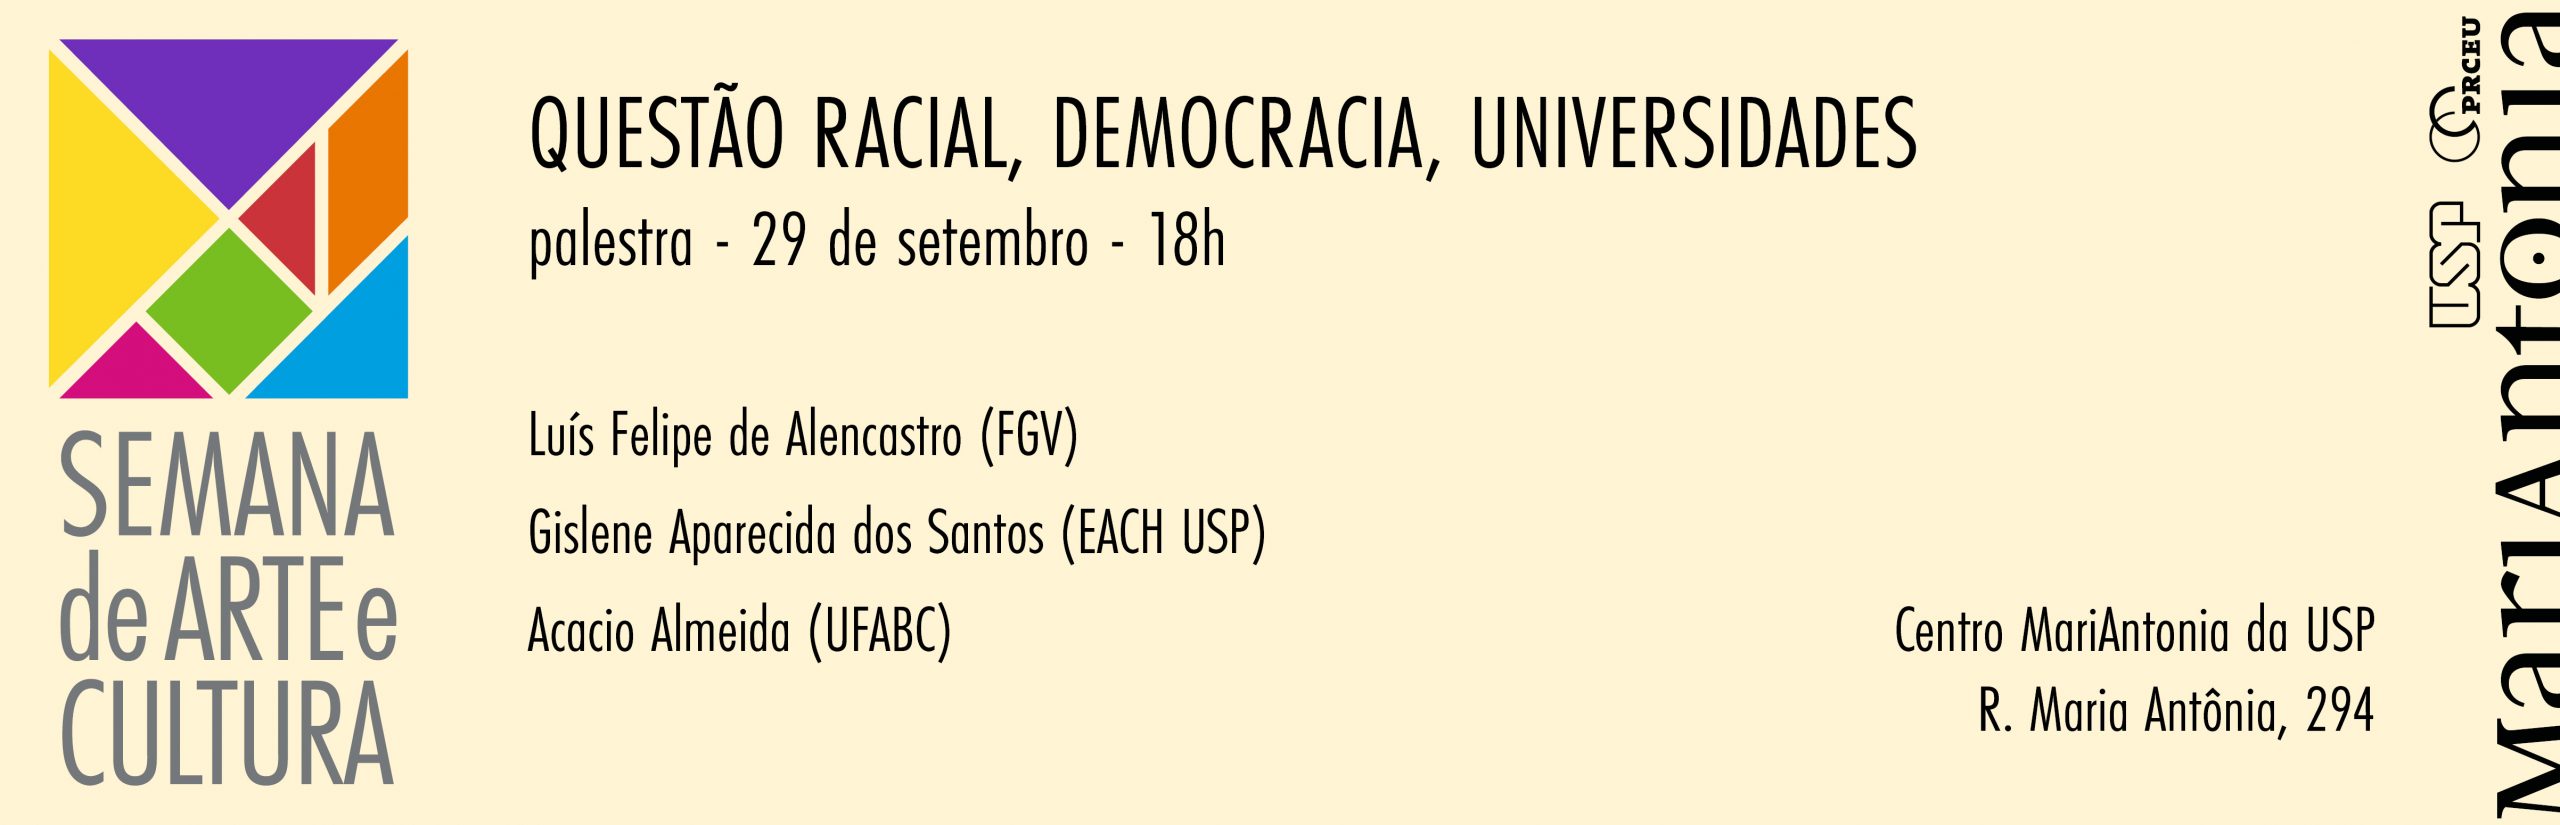 Mesa-redonda “Questão racial, democracia, universidades”